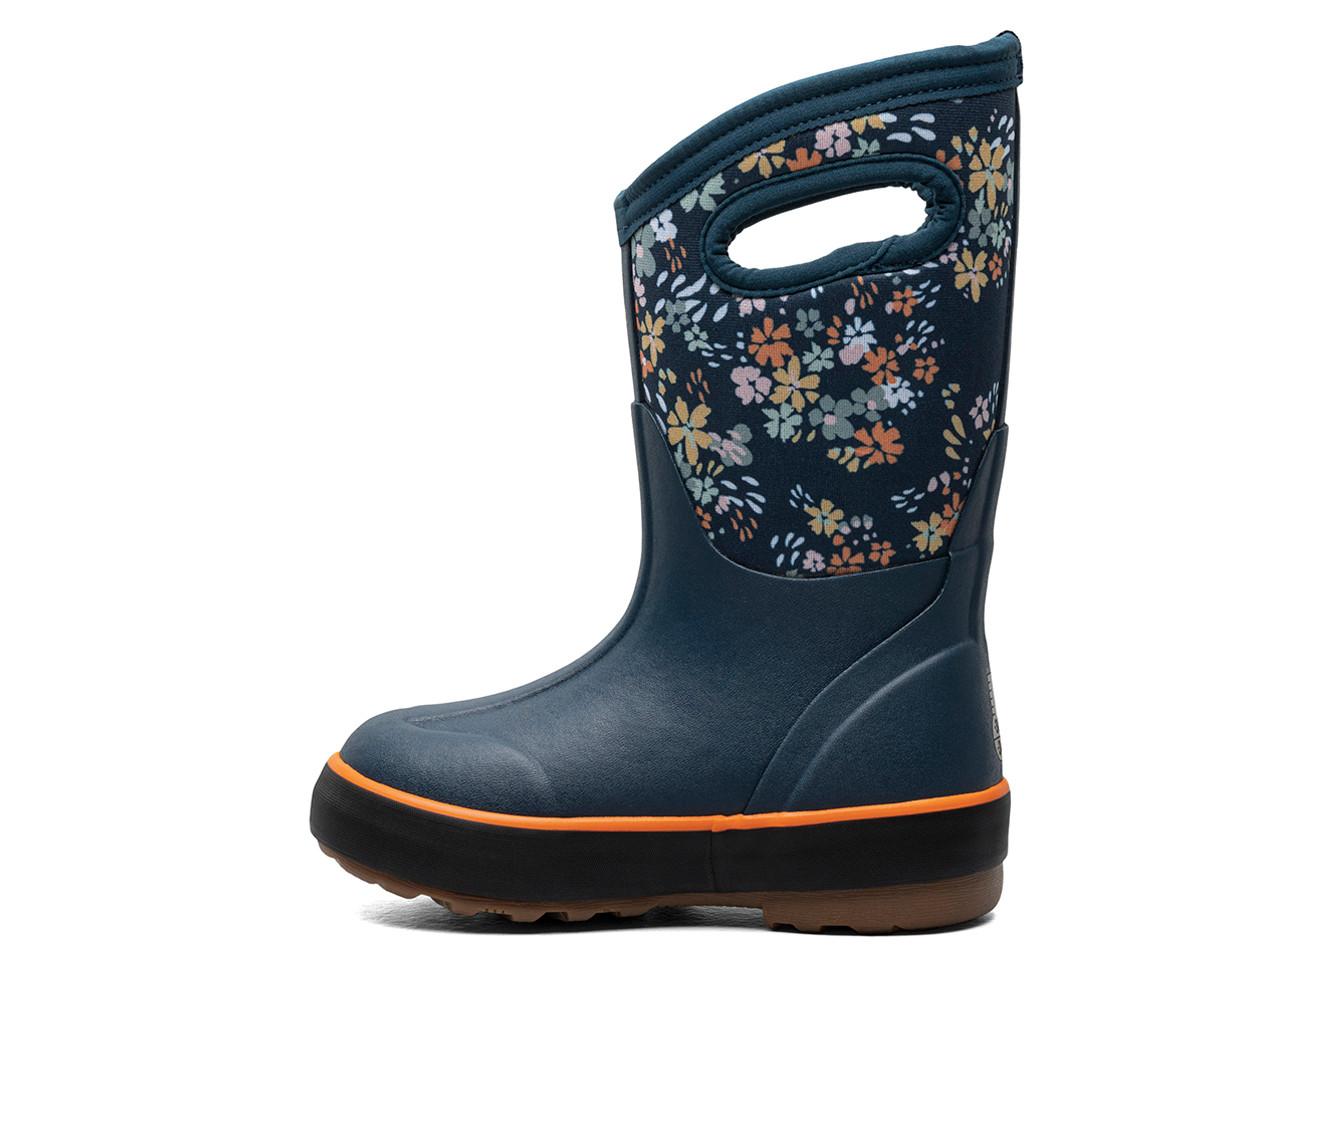 Girls' Bogs Footwear Toddler & Little Kid Classic II Water Garden Winter Boots